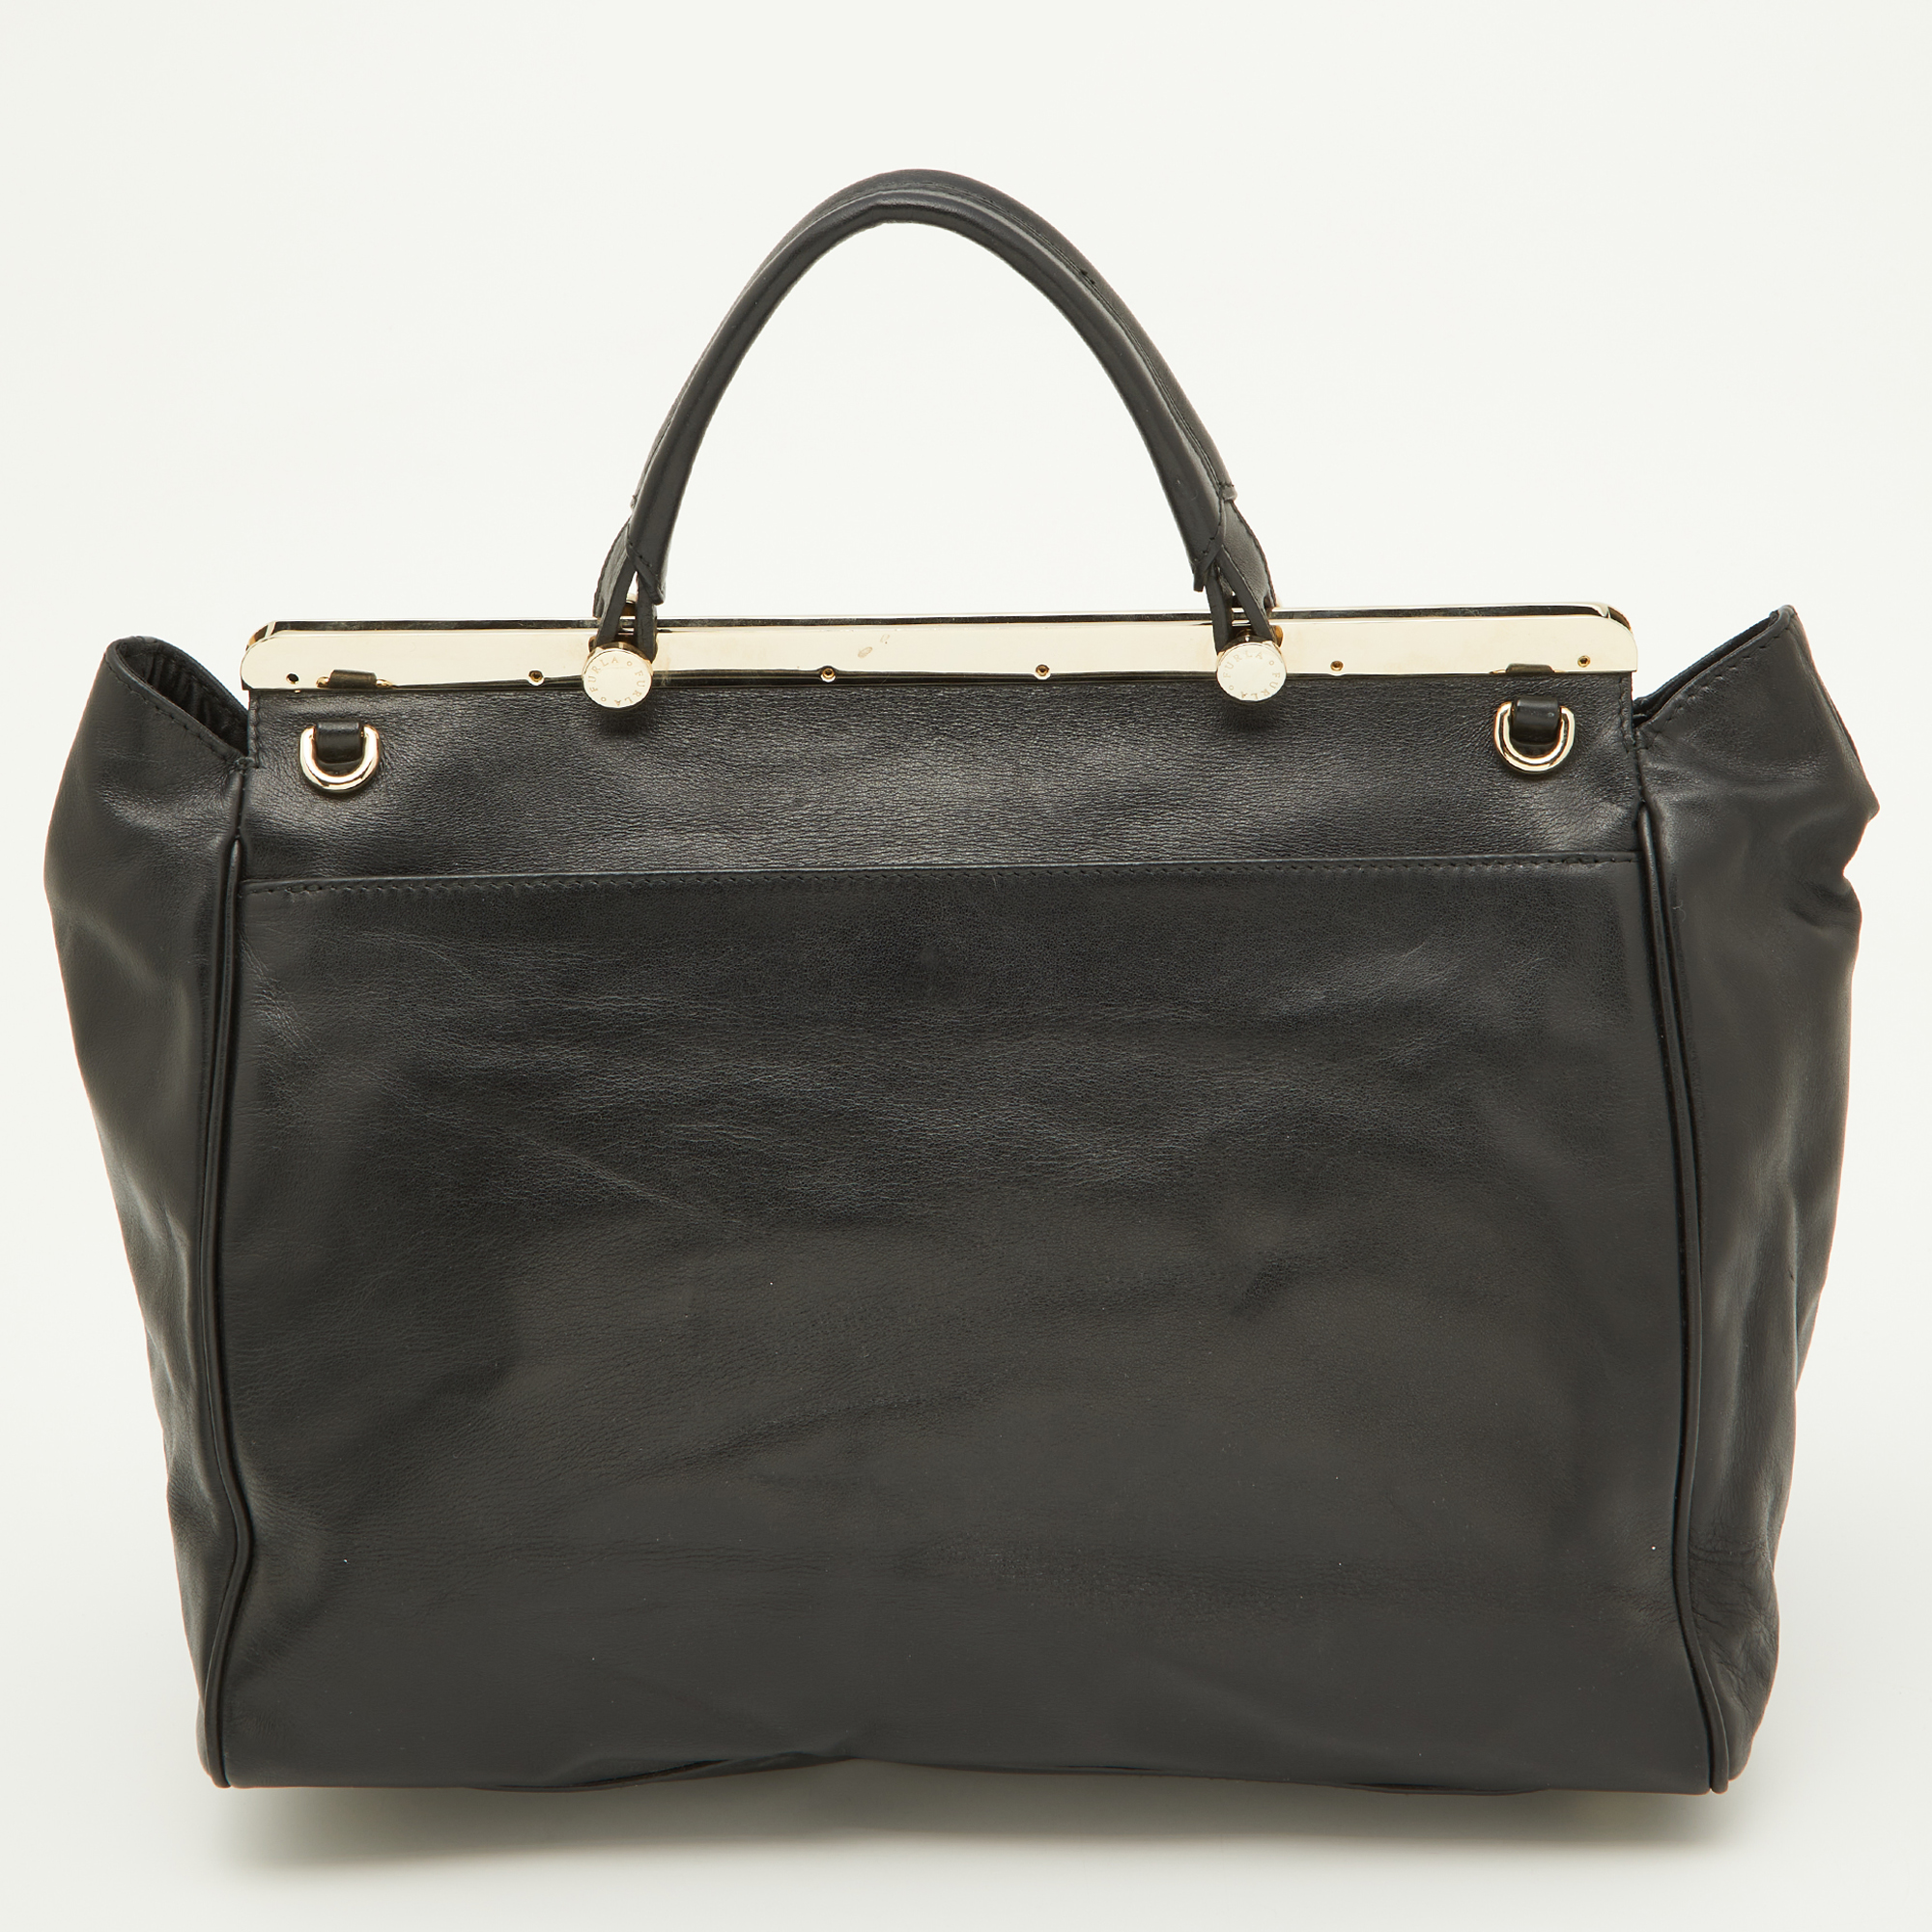 Furla Black/Pink Leather Cortina Top Handle Bag